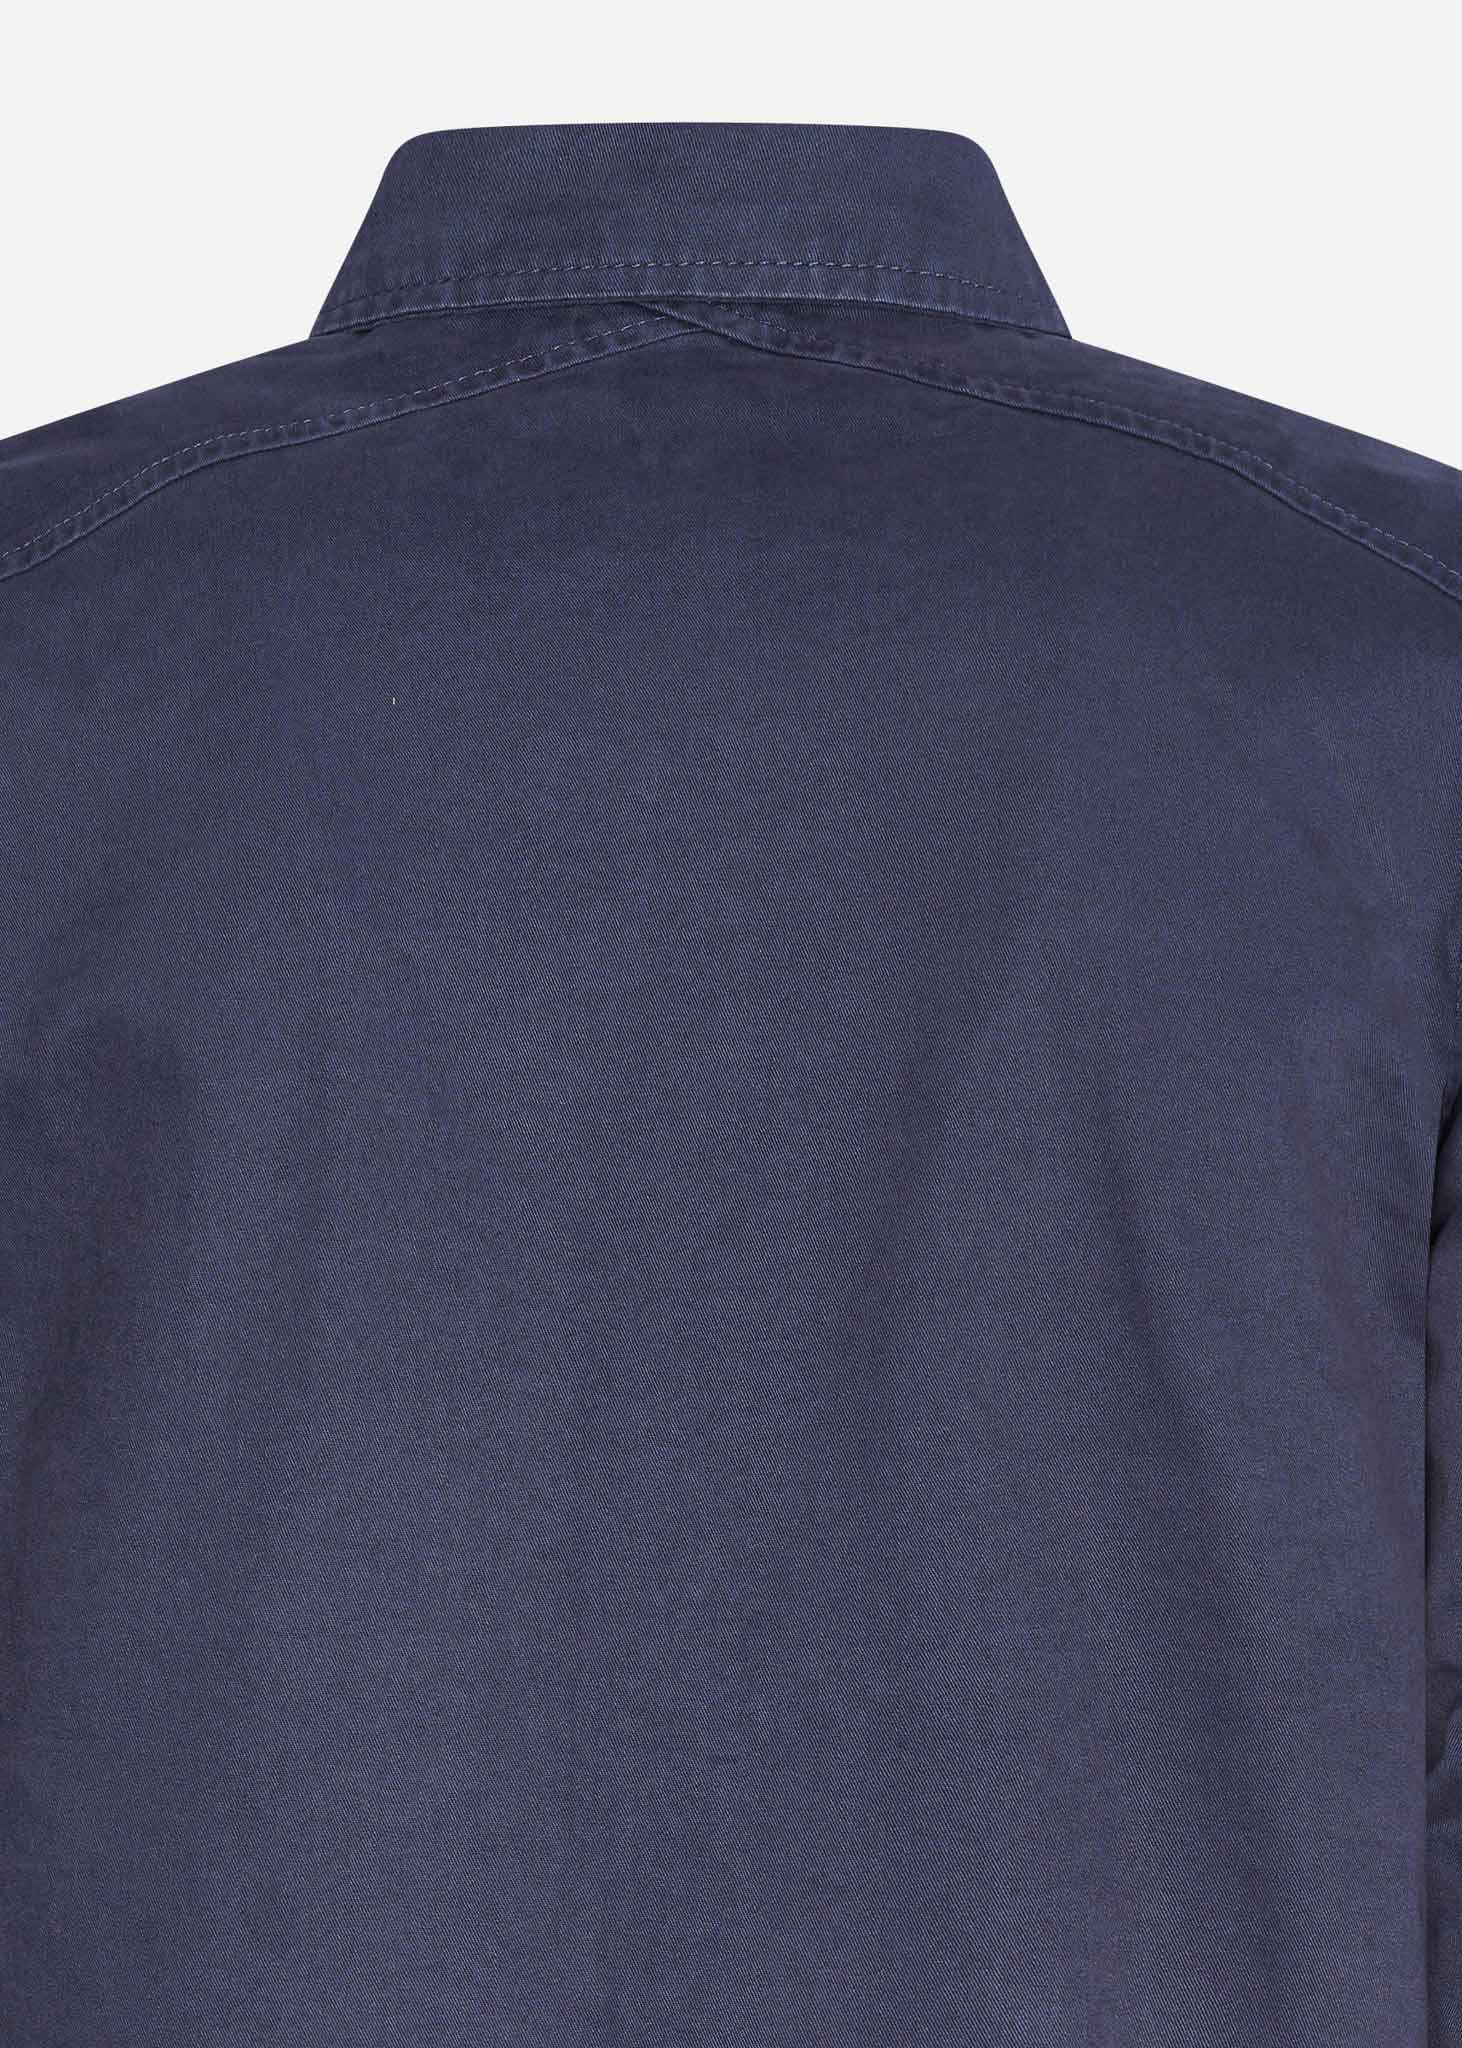 MA.Strum Overshirts  Two pocket overshirt - ink navy 